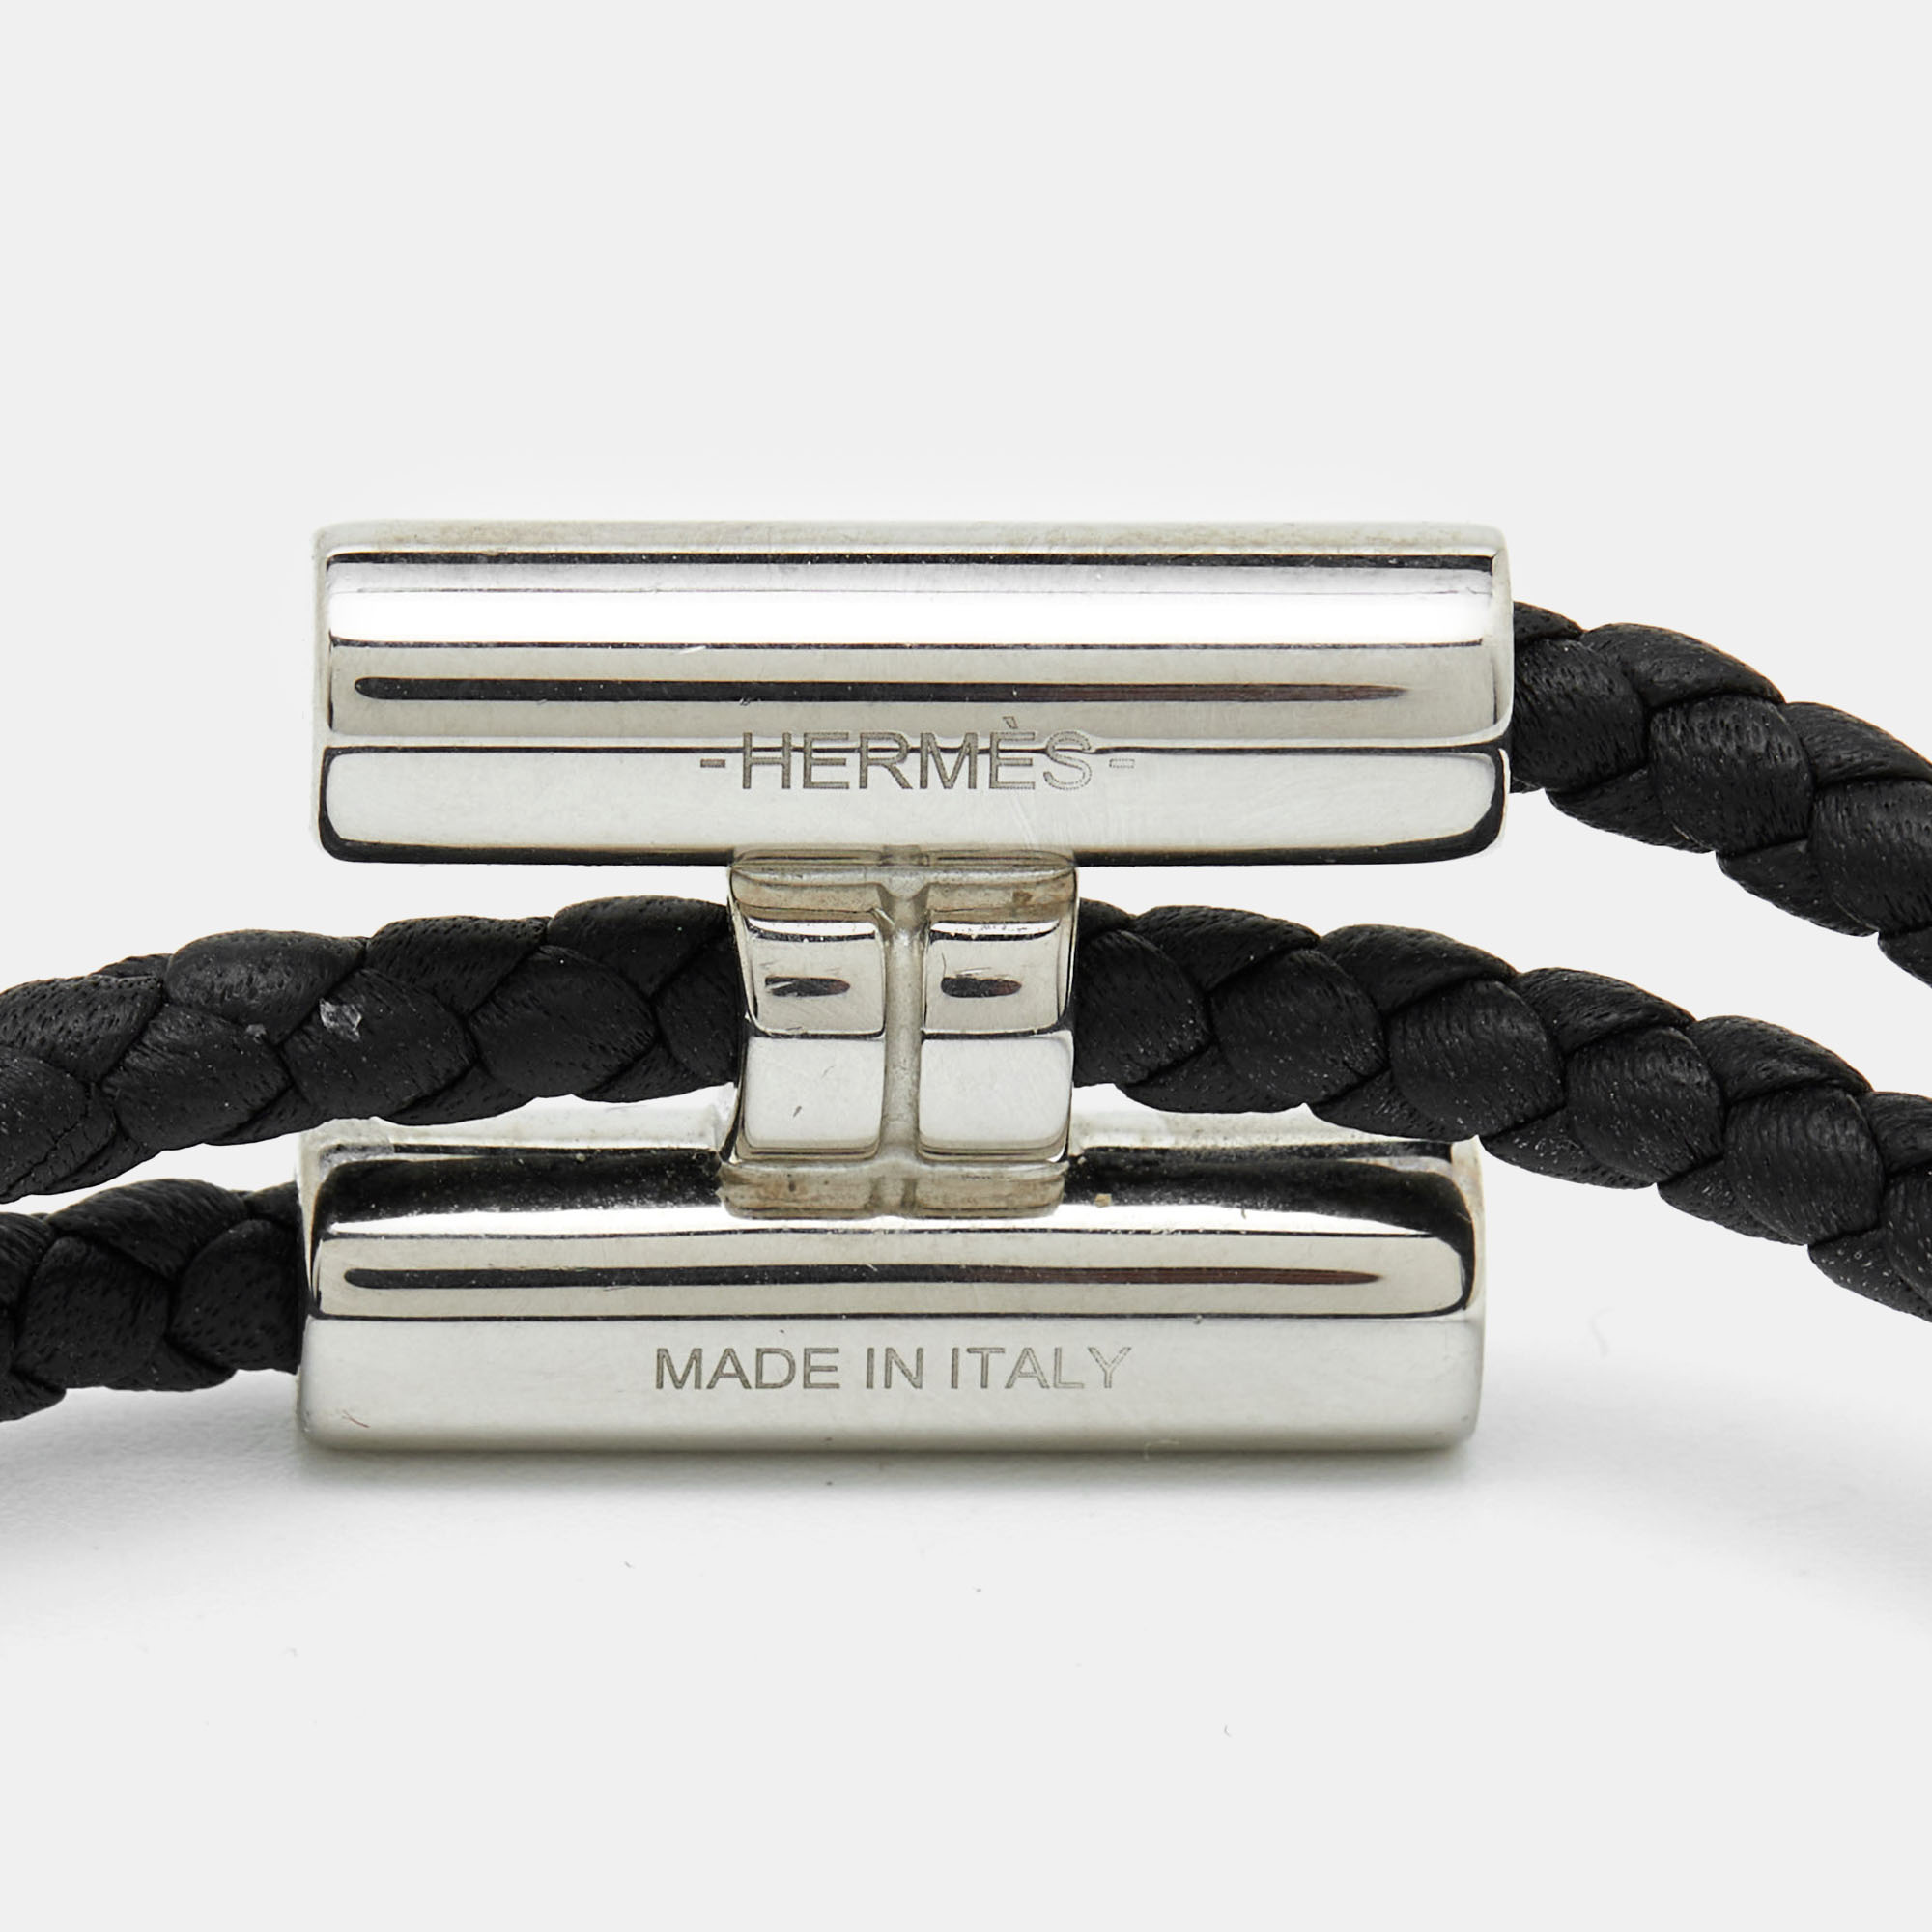 Hermes Turnis Braid Leather Black Silver Tone Bracelet